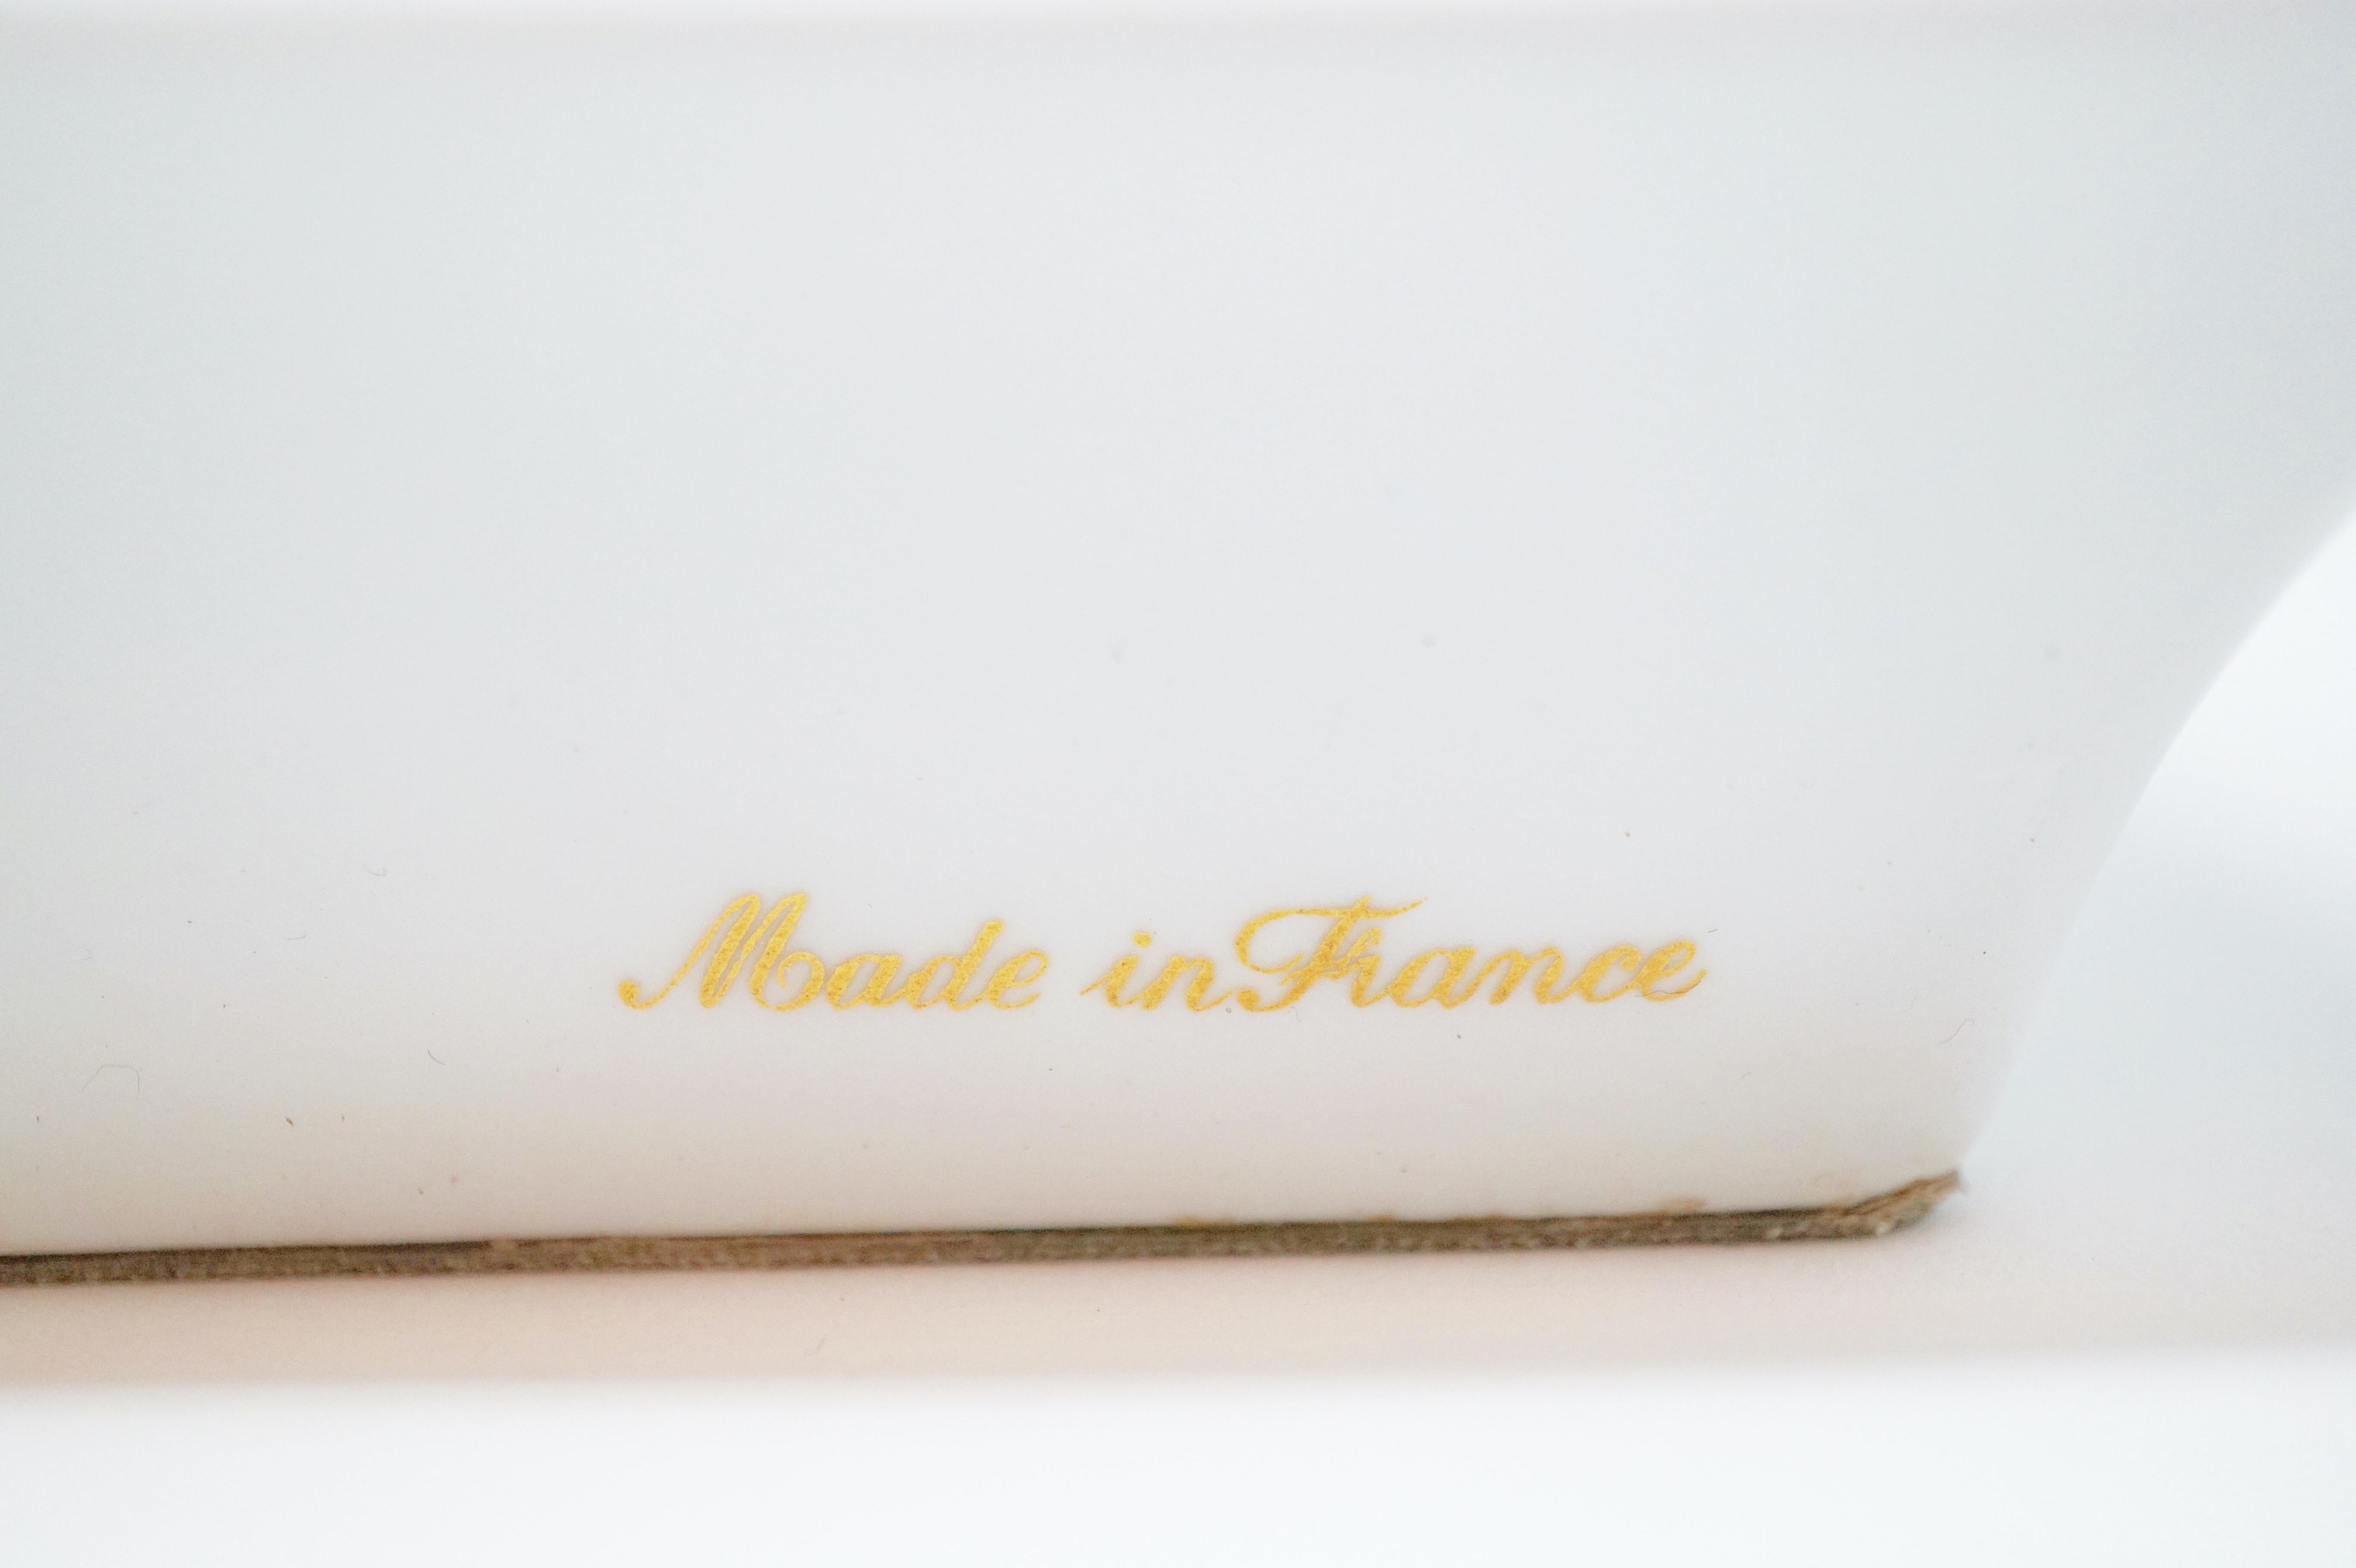 French Hermès Porcelain Ashtray with Horse Design, Signed